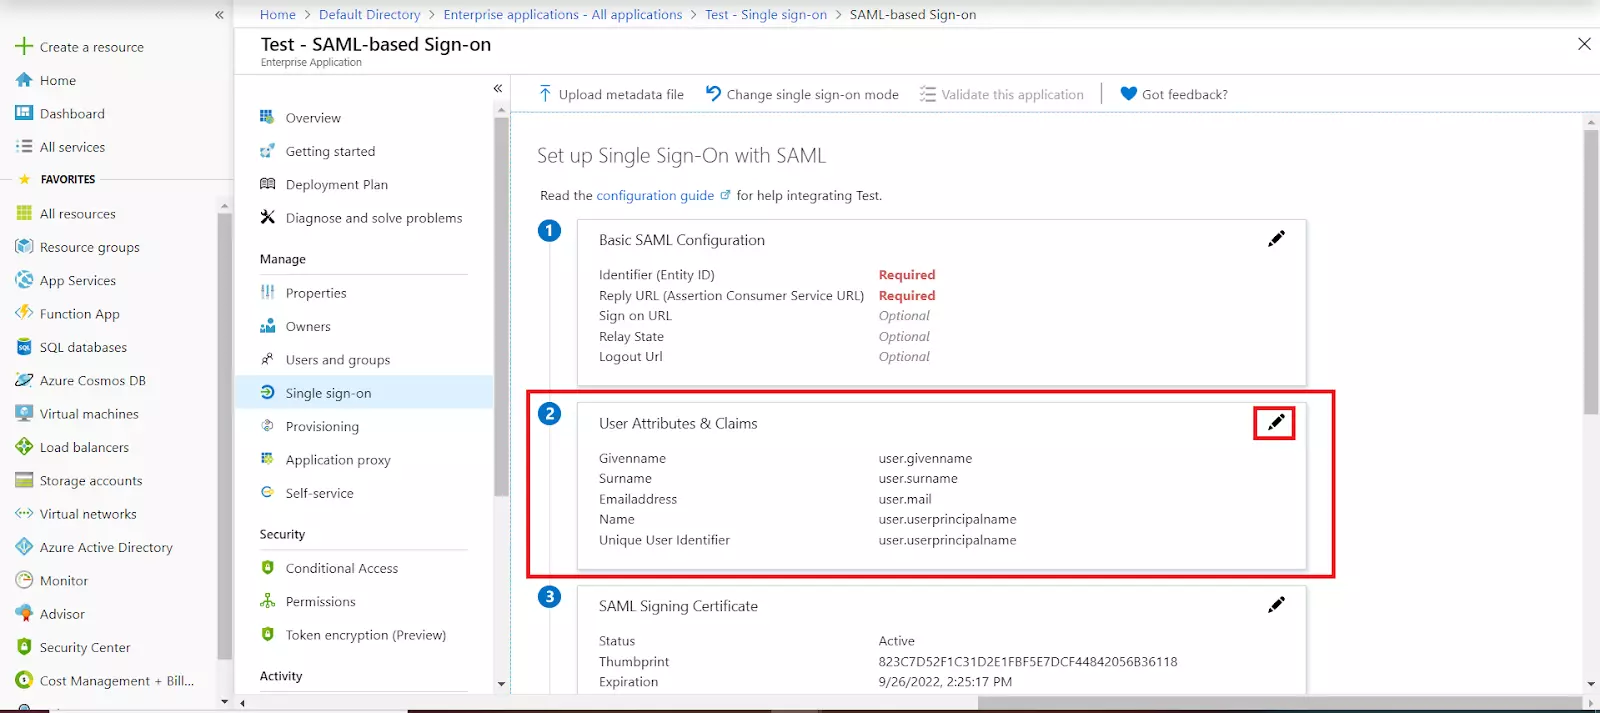 Configure Azure AD as IDP -SAML Single Sign-On(SSO) for Joomla - Azure AD SSO Login - Azure AD User attributes